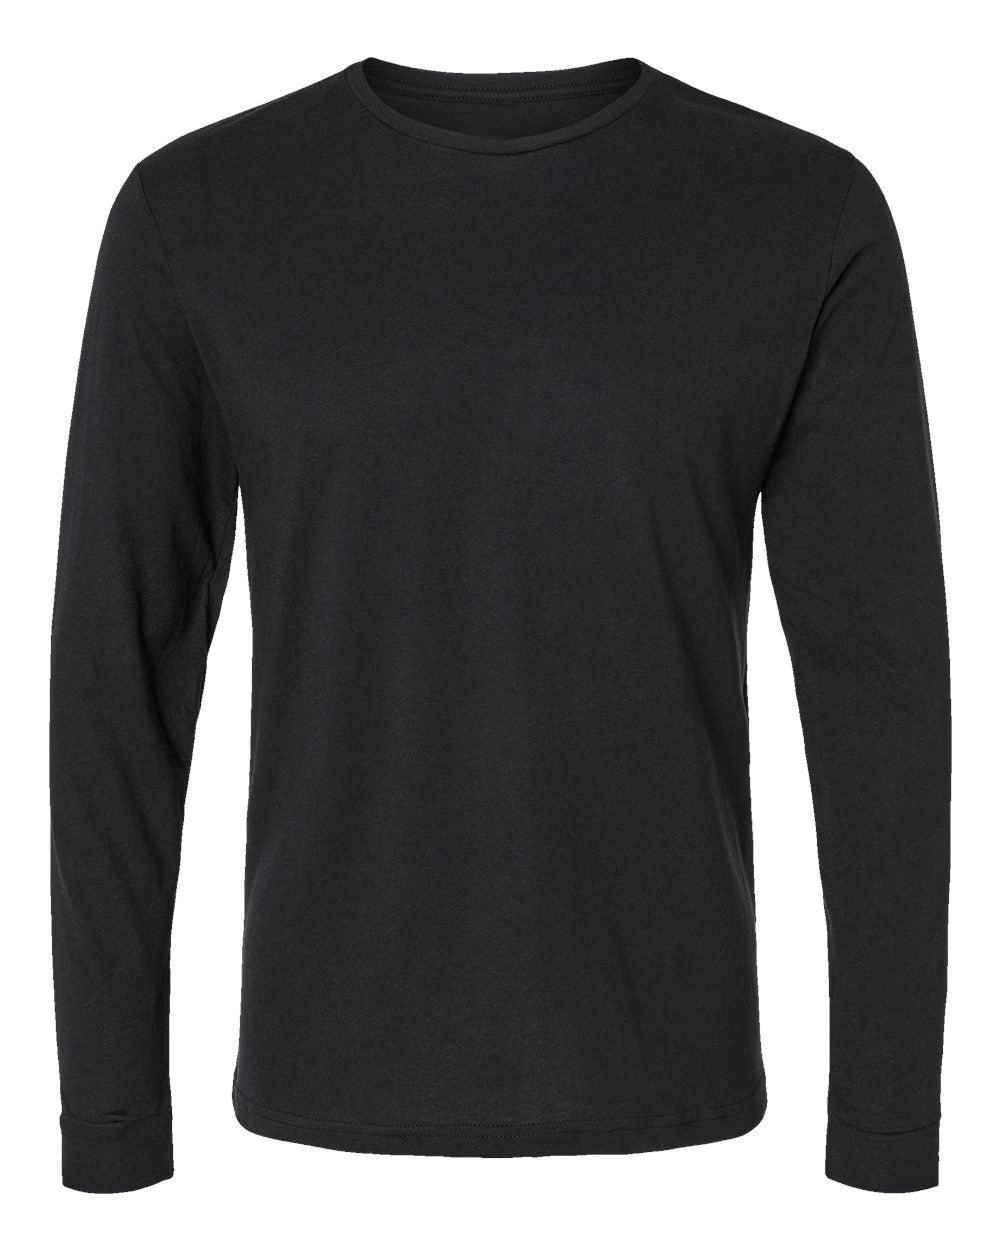 Unisex Long Sleeve T-shirt